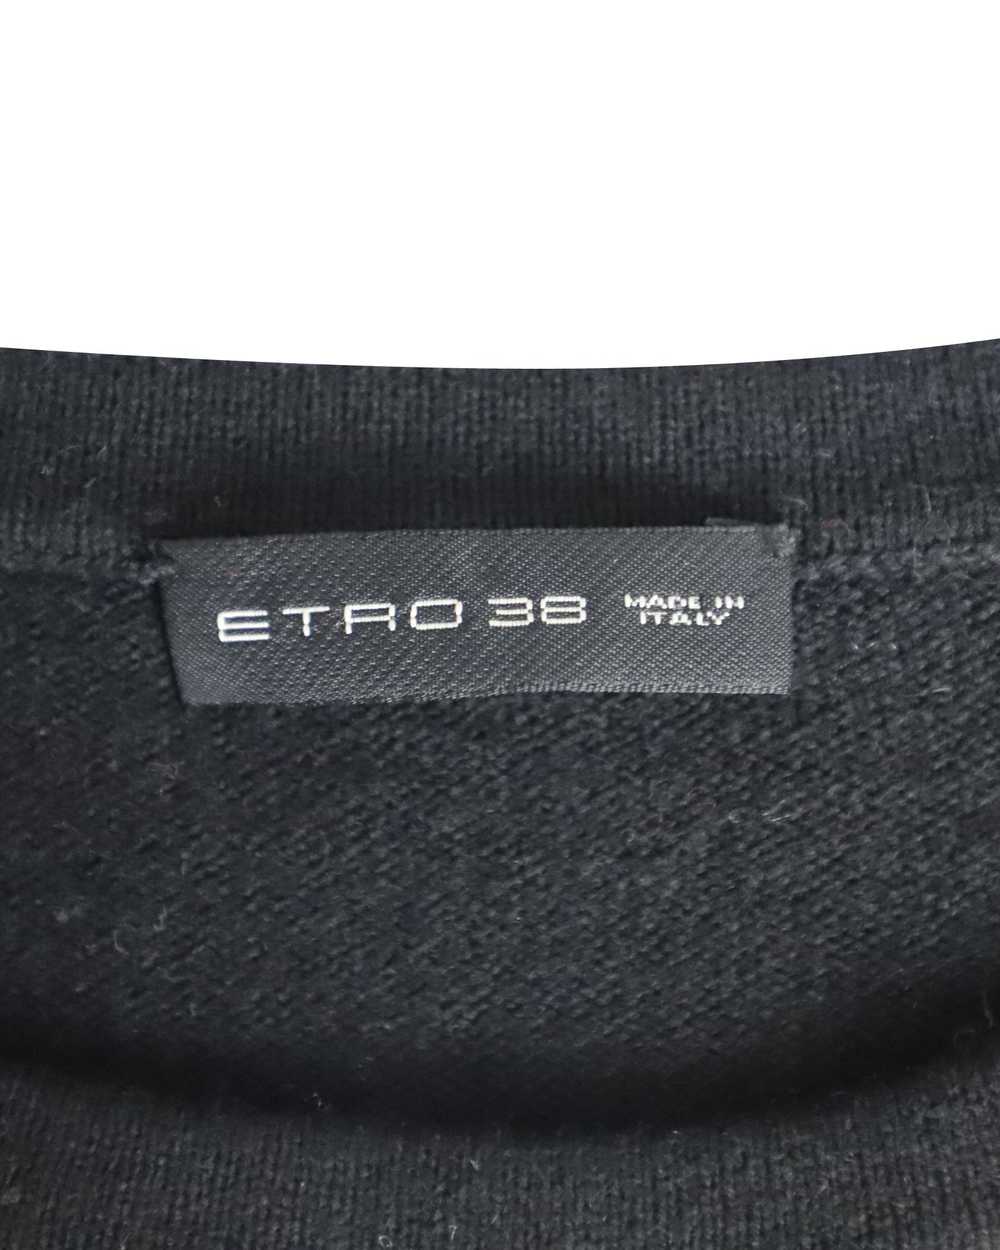 Product Details Floral Printed Black Wool Jumper - image 5